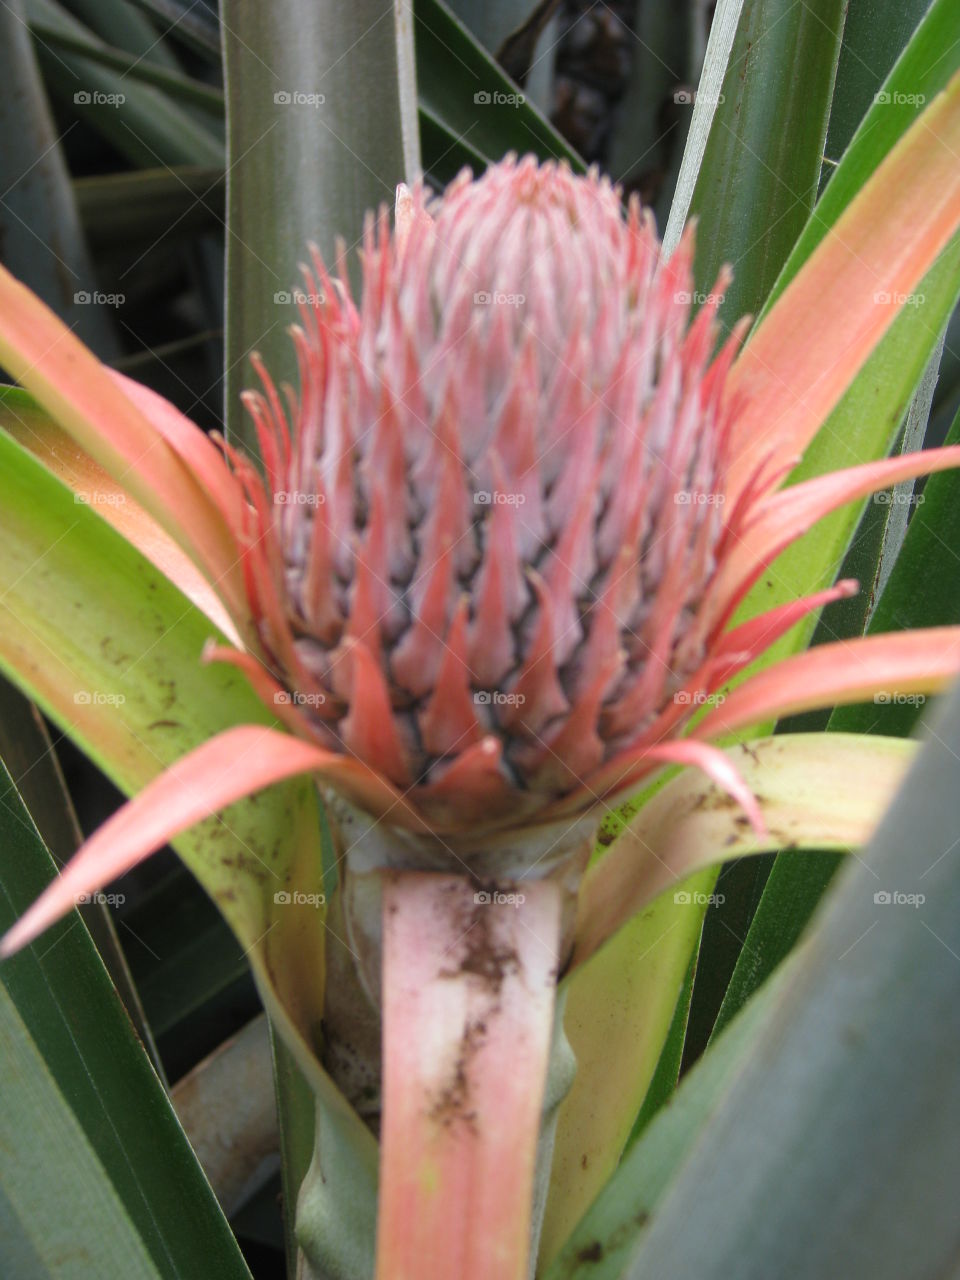 Growing Pineapple